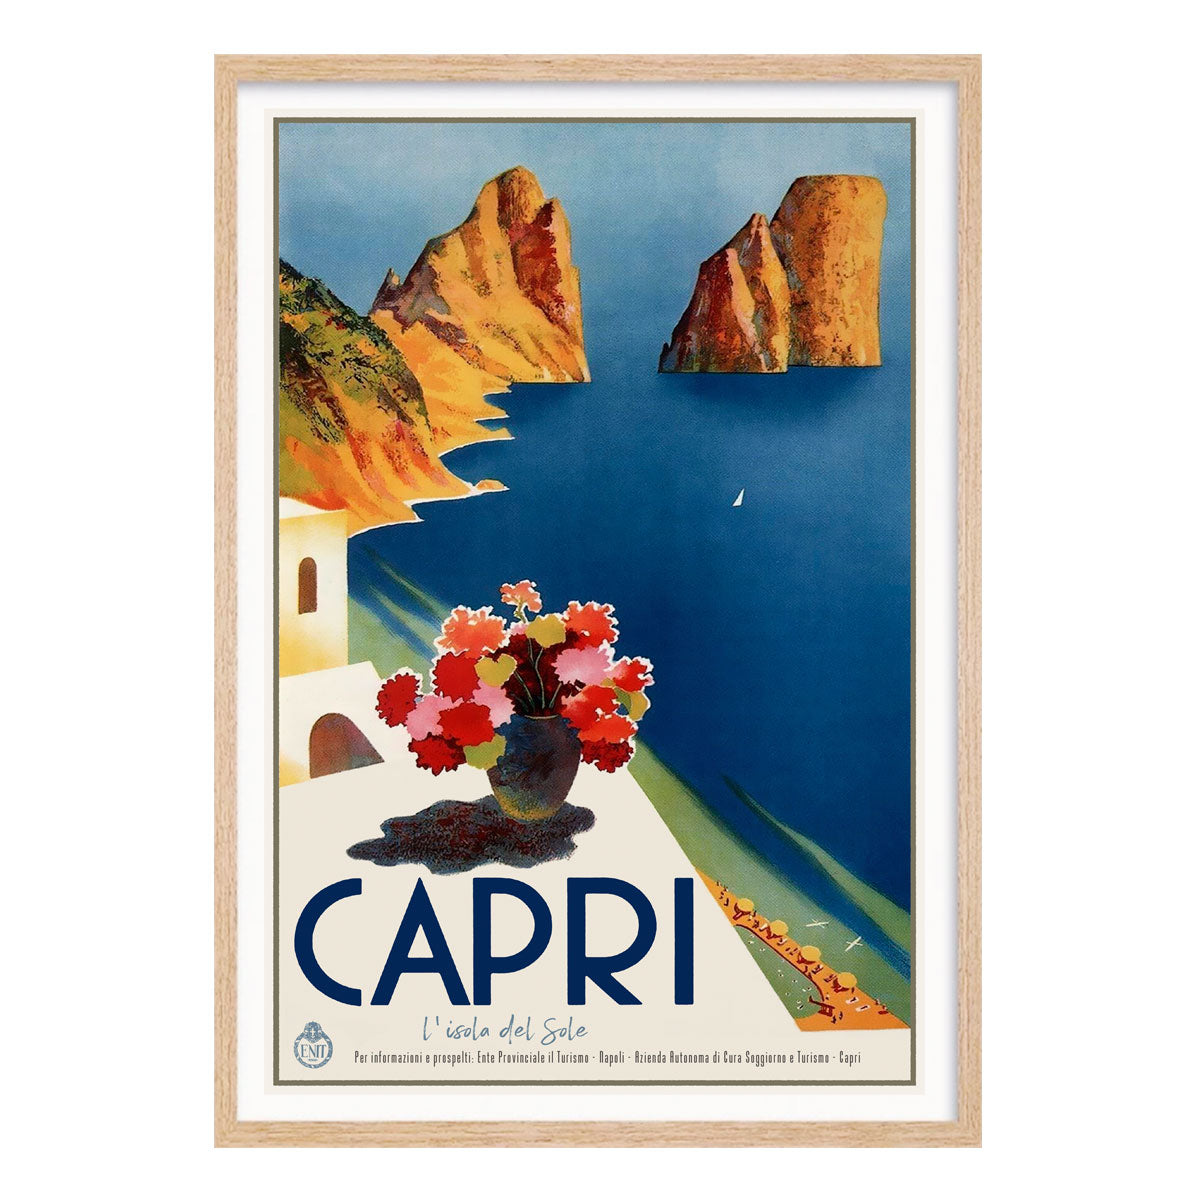 Capri Italy retro print